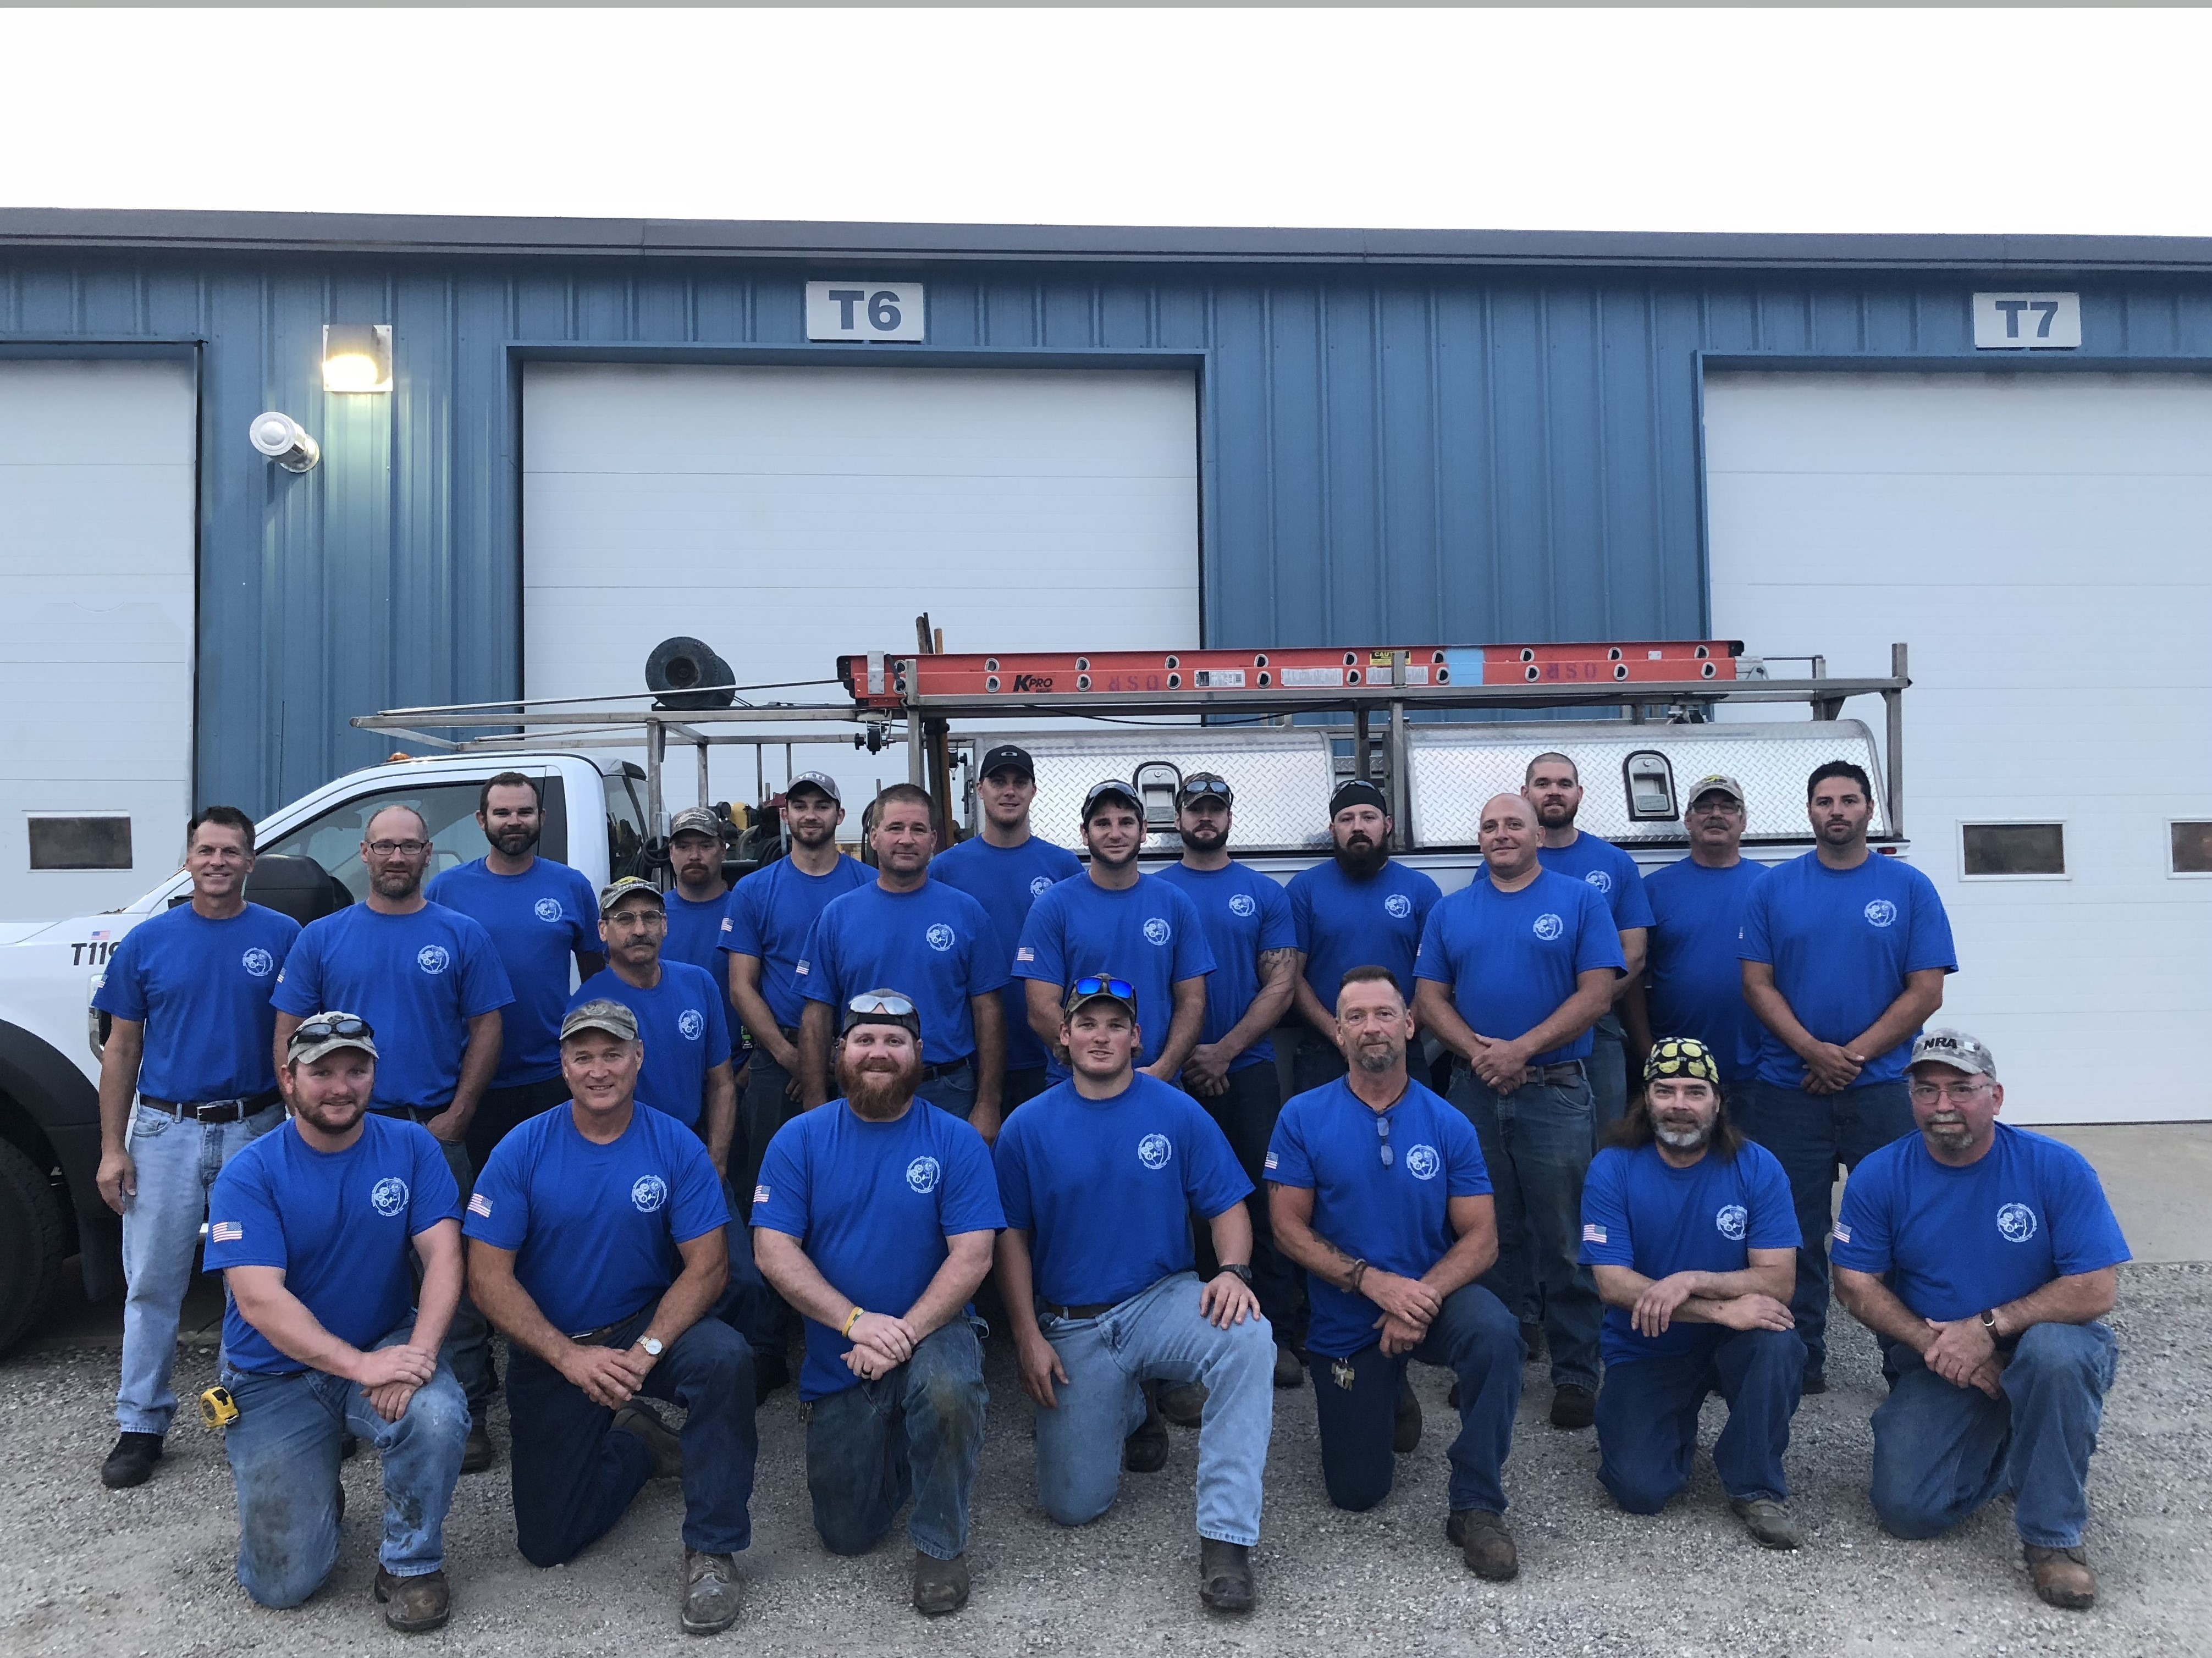 On Site Repair Industrial Millwrights Apprenticeship graduates of Illinois specializing in preventative maintenance & emergency repair